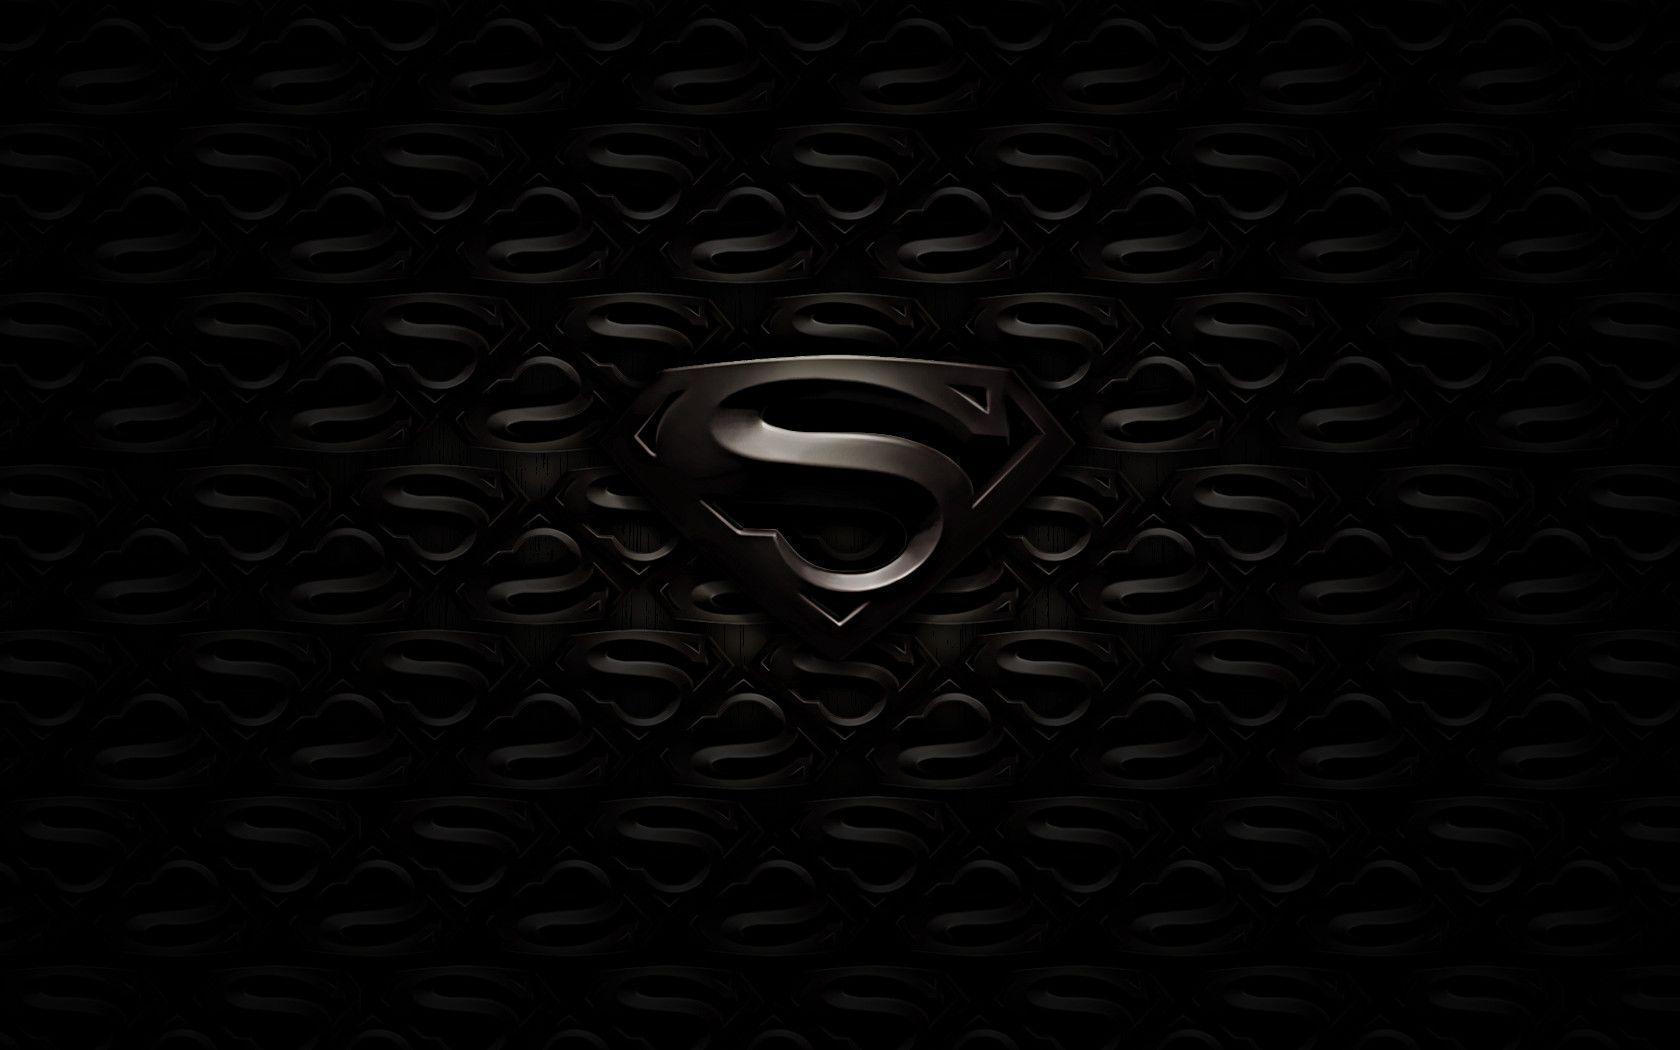 Superman Badge Image 53145 Wallpaper: 1680x1050